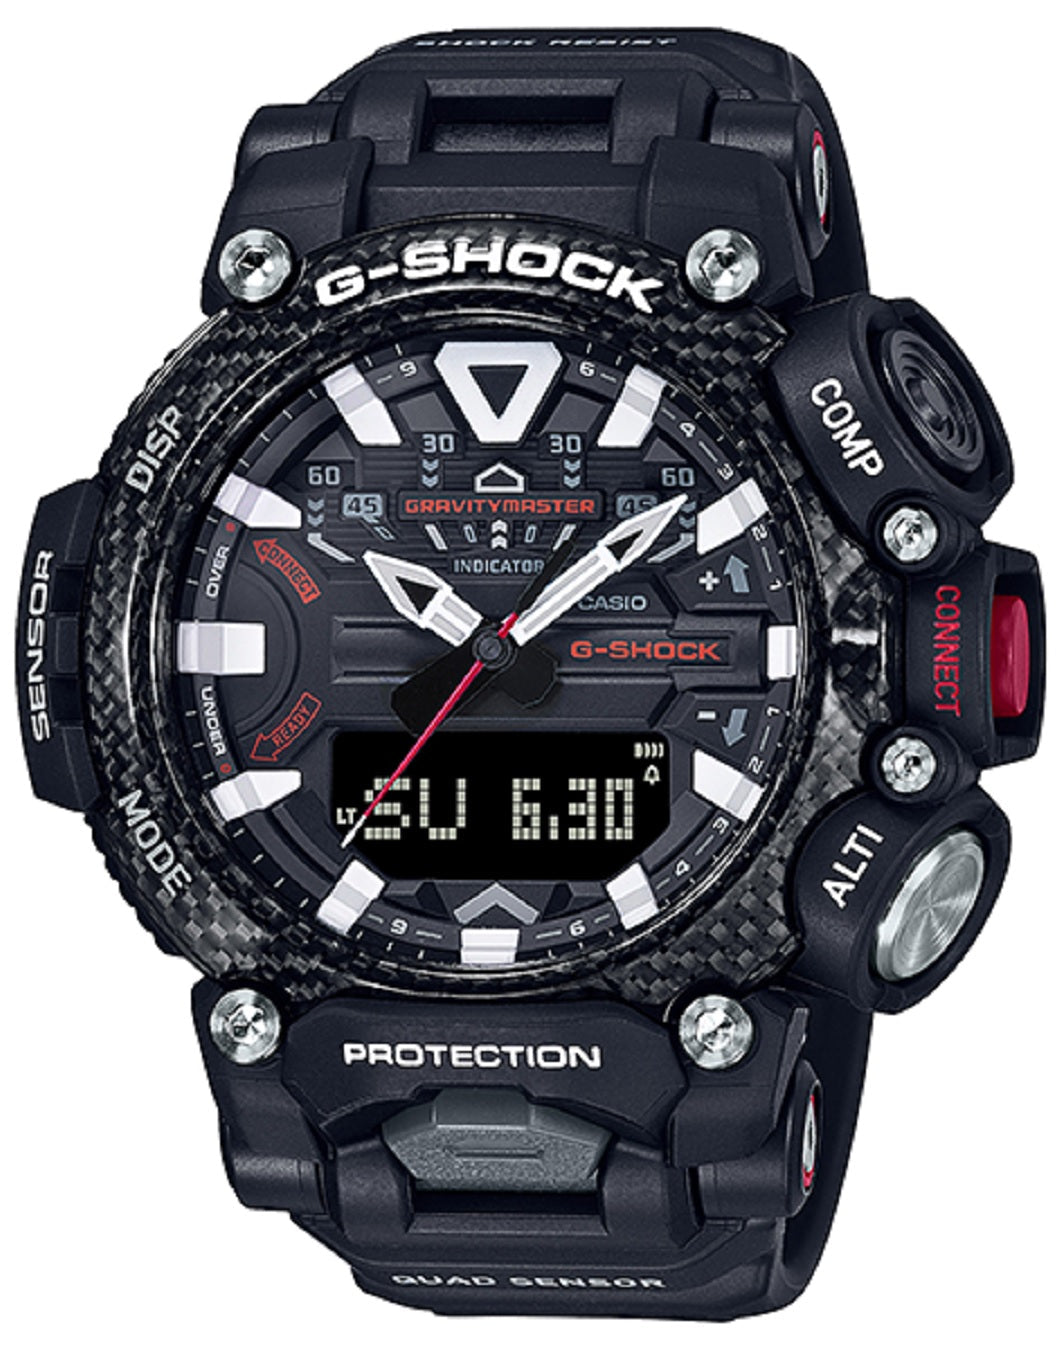 Casio G-shock GR-B200-1A Gravity Master Digital Analog Bluetooth Watch-Watch Portal Philippines